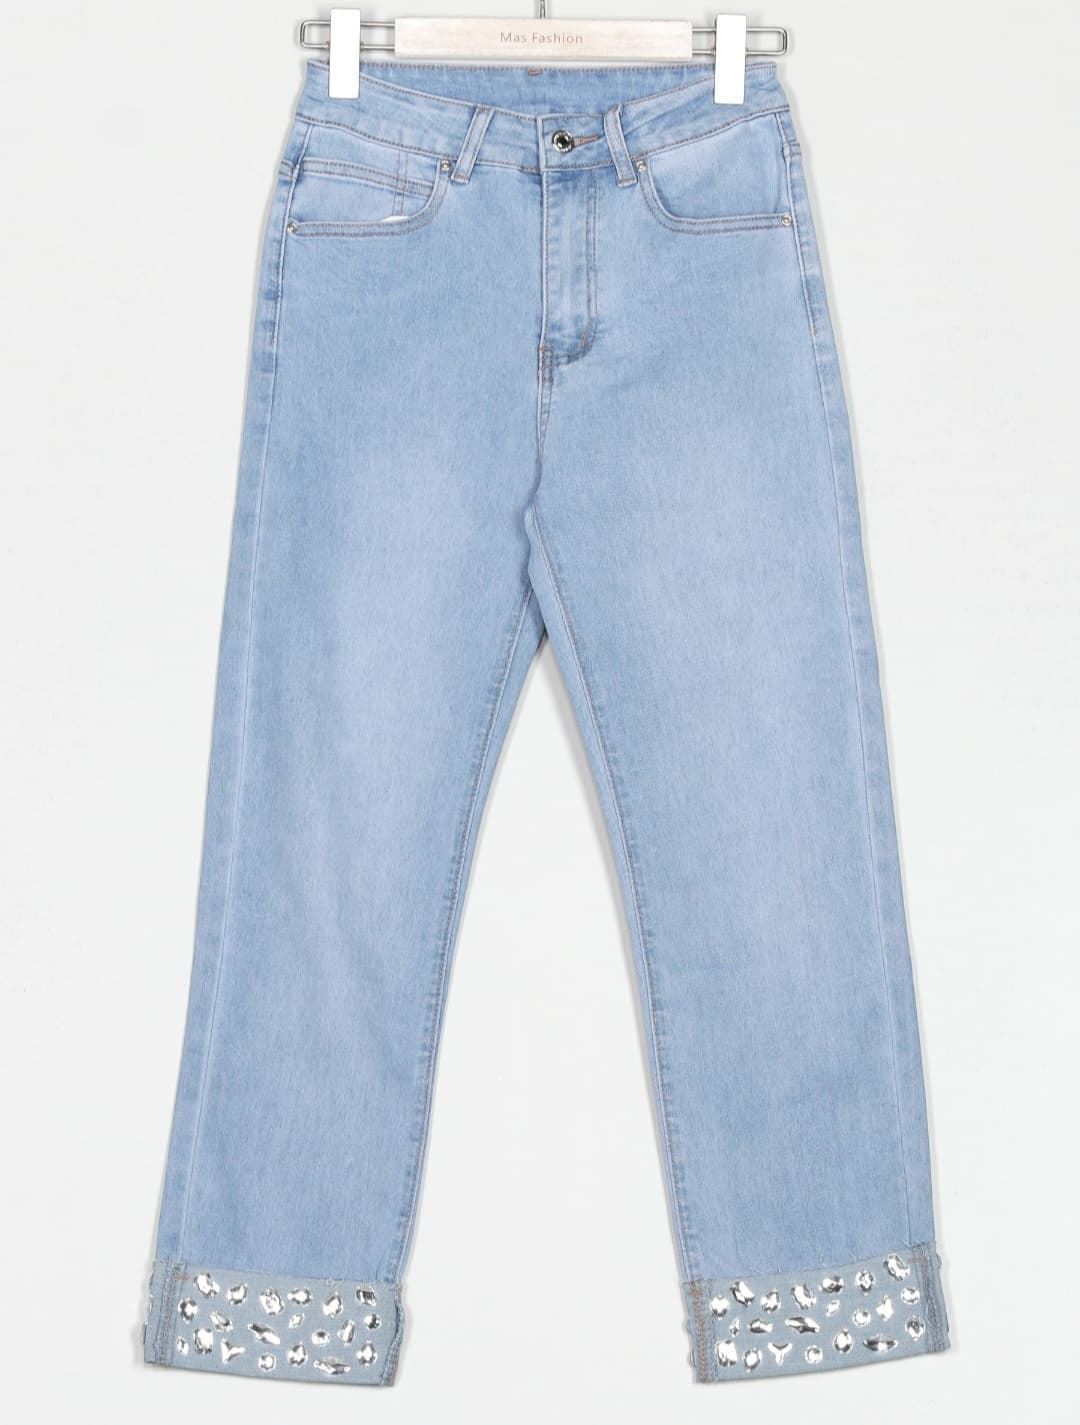 Jeans zafiro - Imagen 4